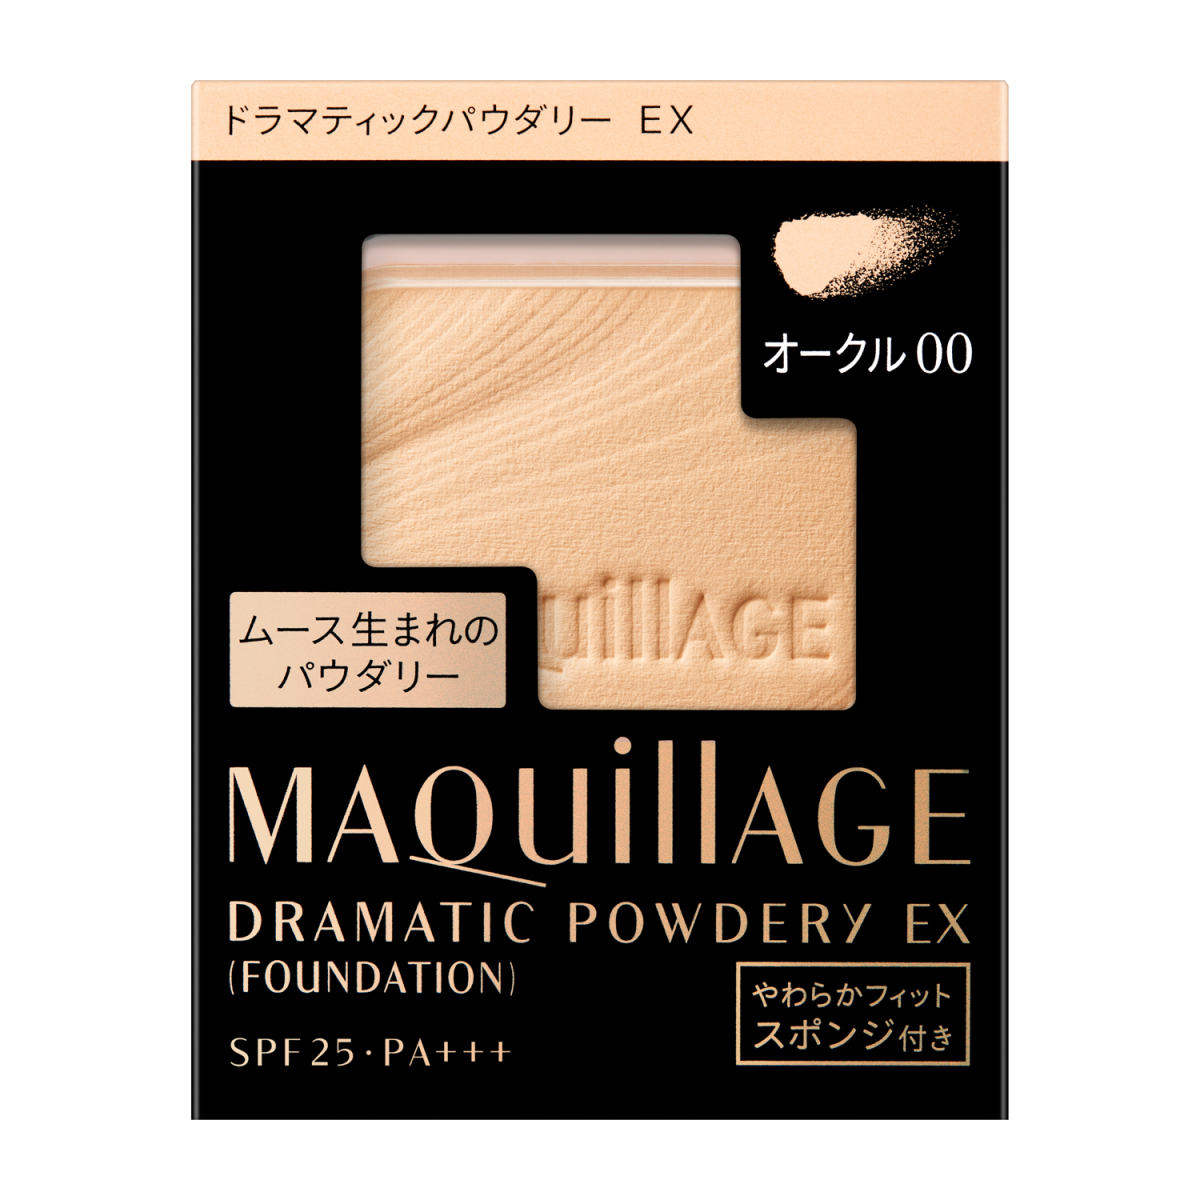  MAQuillAGE gong matic powder Lee EX oak ru00re Phil 9.3g